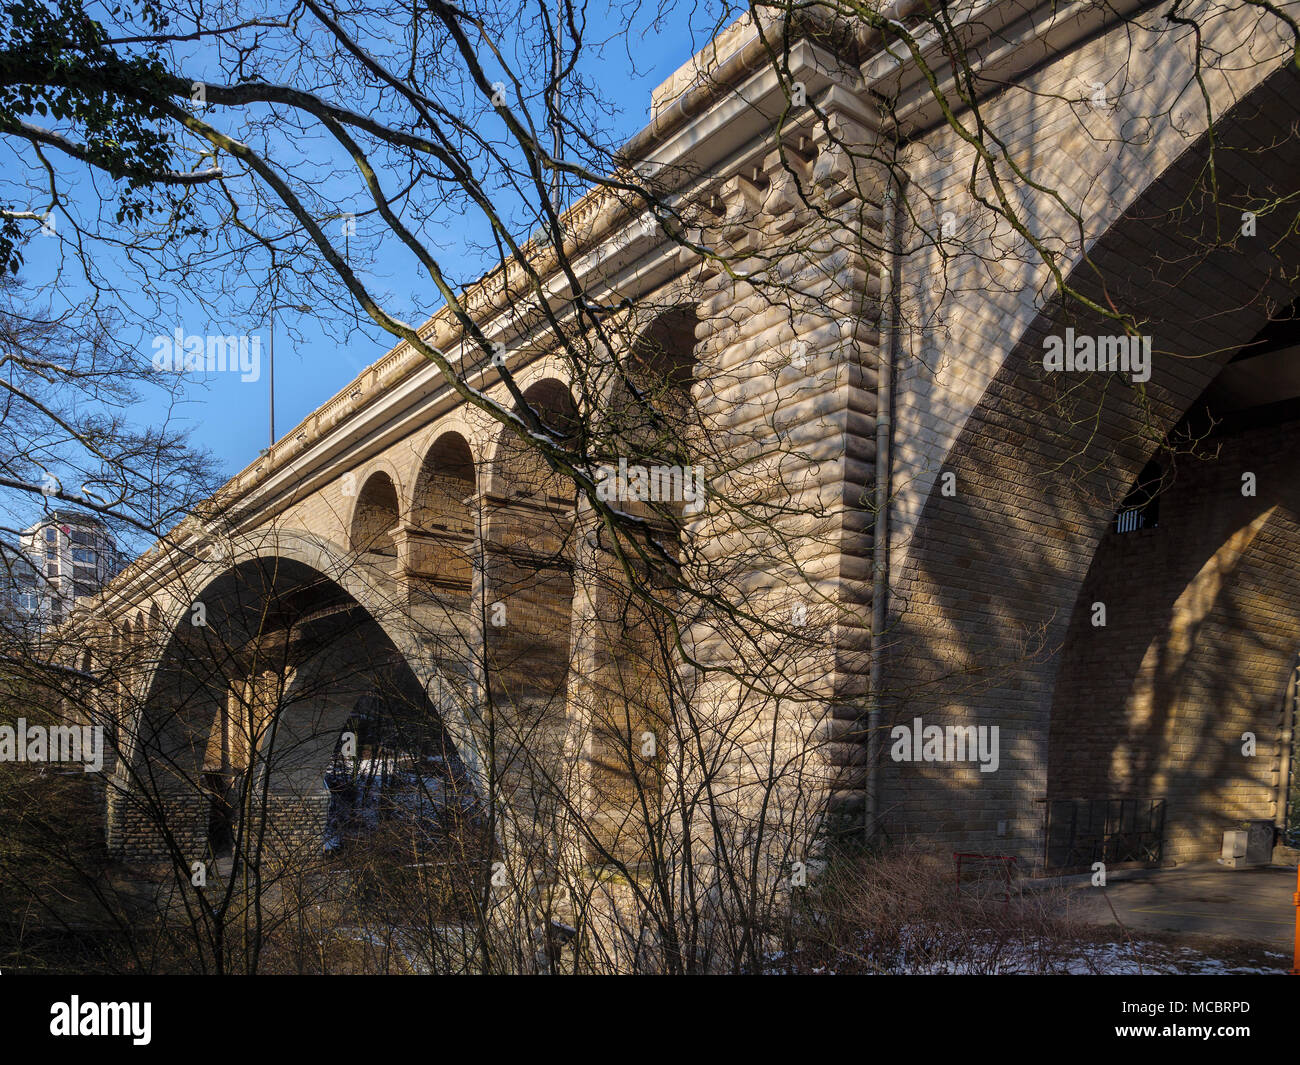 Pont Adolphe crossing Vallee de la Petrusse, Luxembourg City, Europe, UNESCO Heritage Site Stock Photo